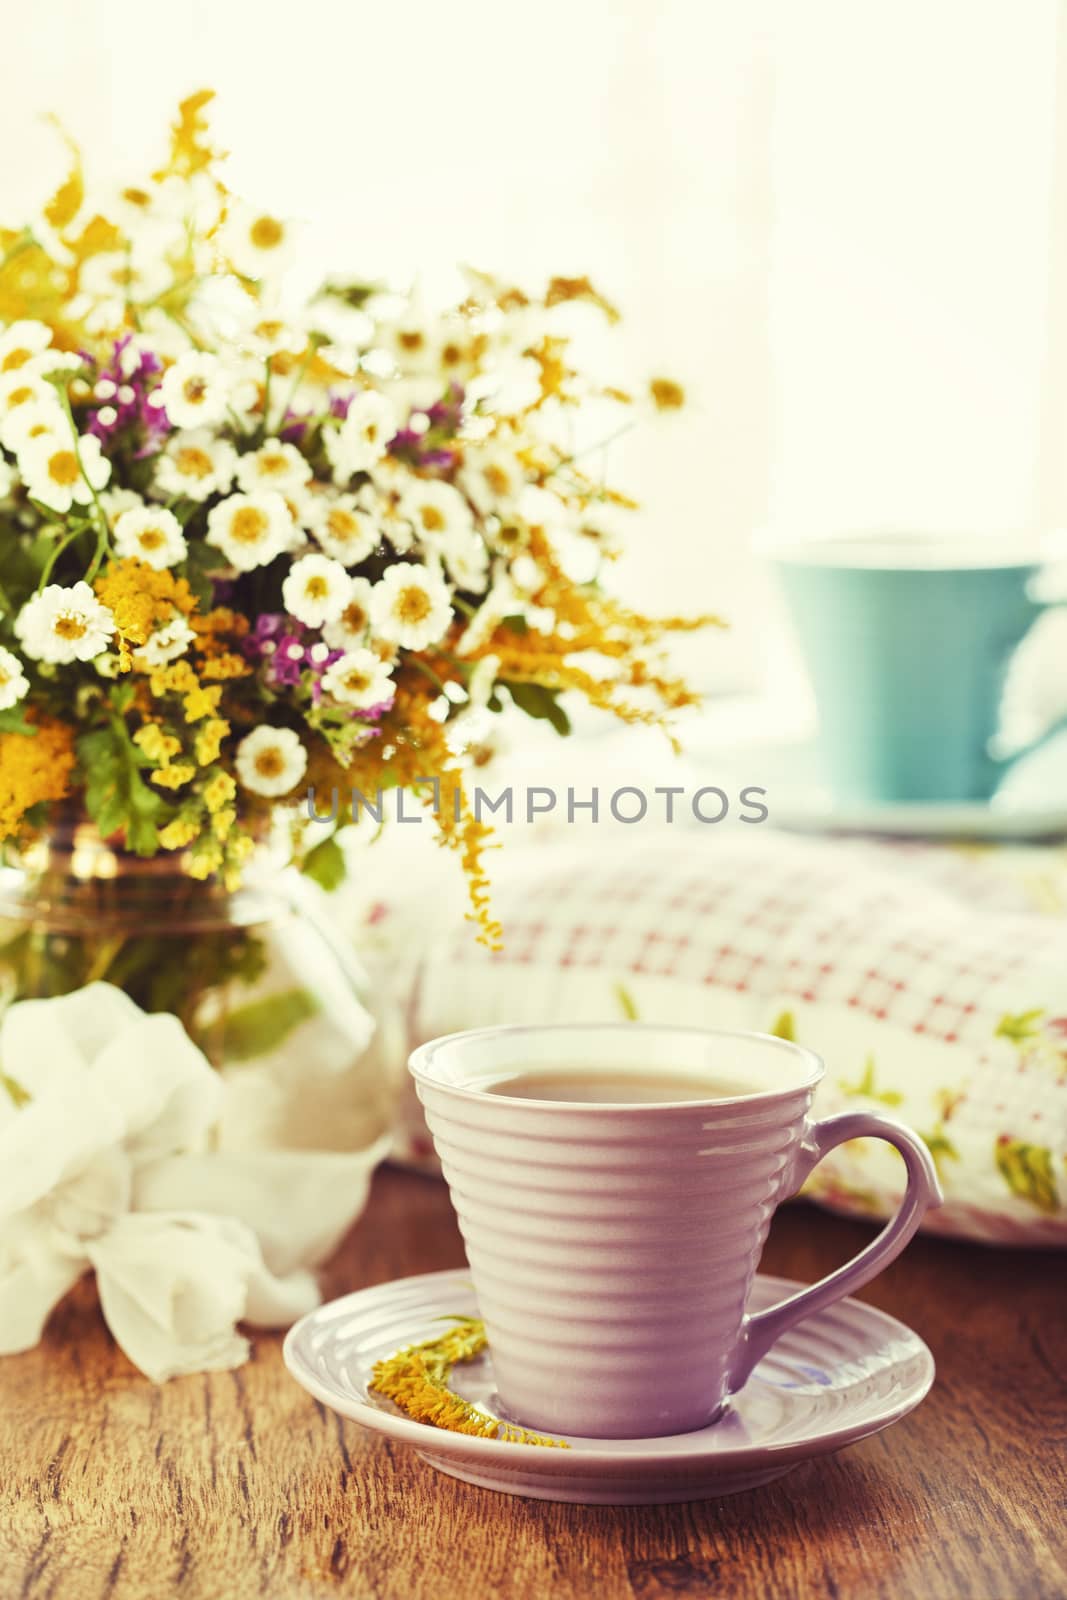 Morning tea by mariakomar